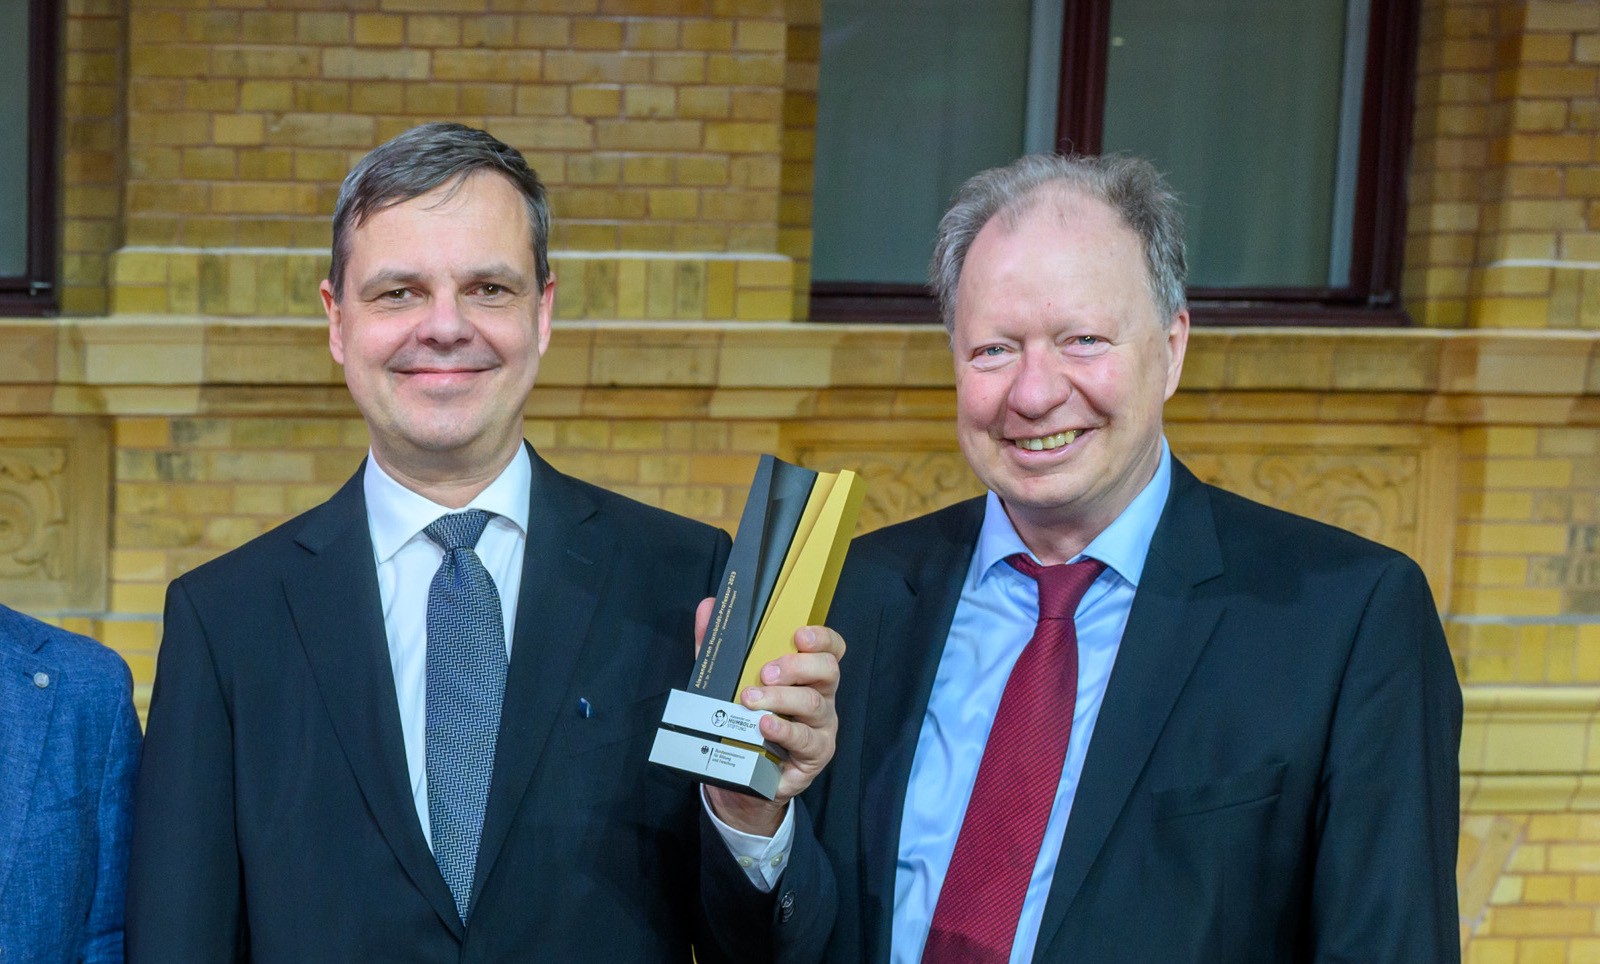 Dieter Schmalstieg, Alexander von Humboldt Professor of Visual Computing at the University of Stuttgart, with his trophy.